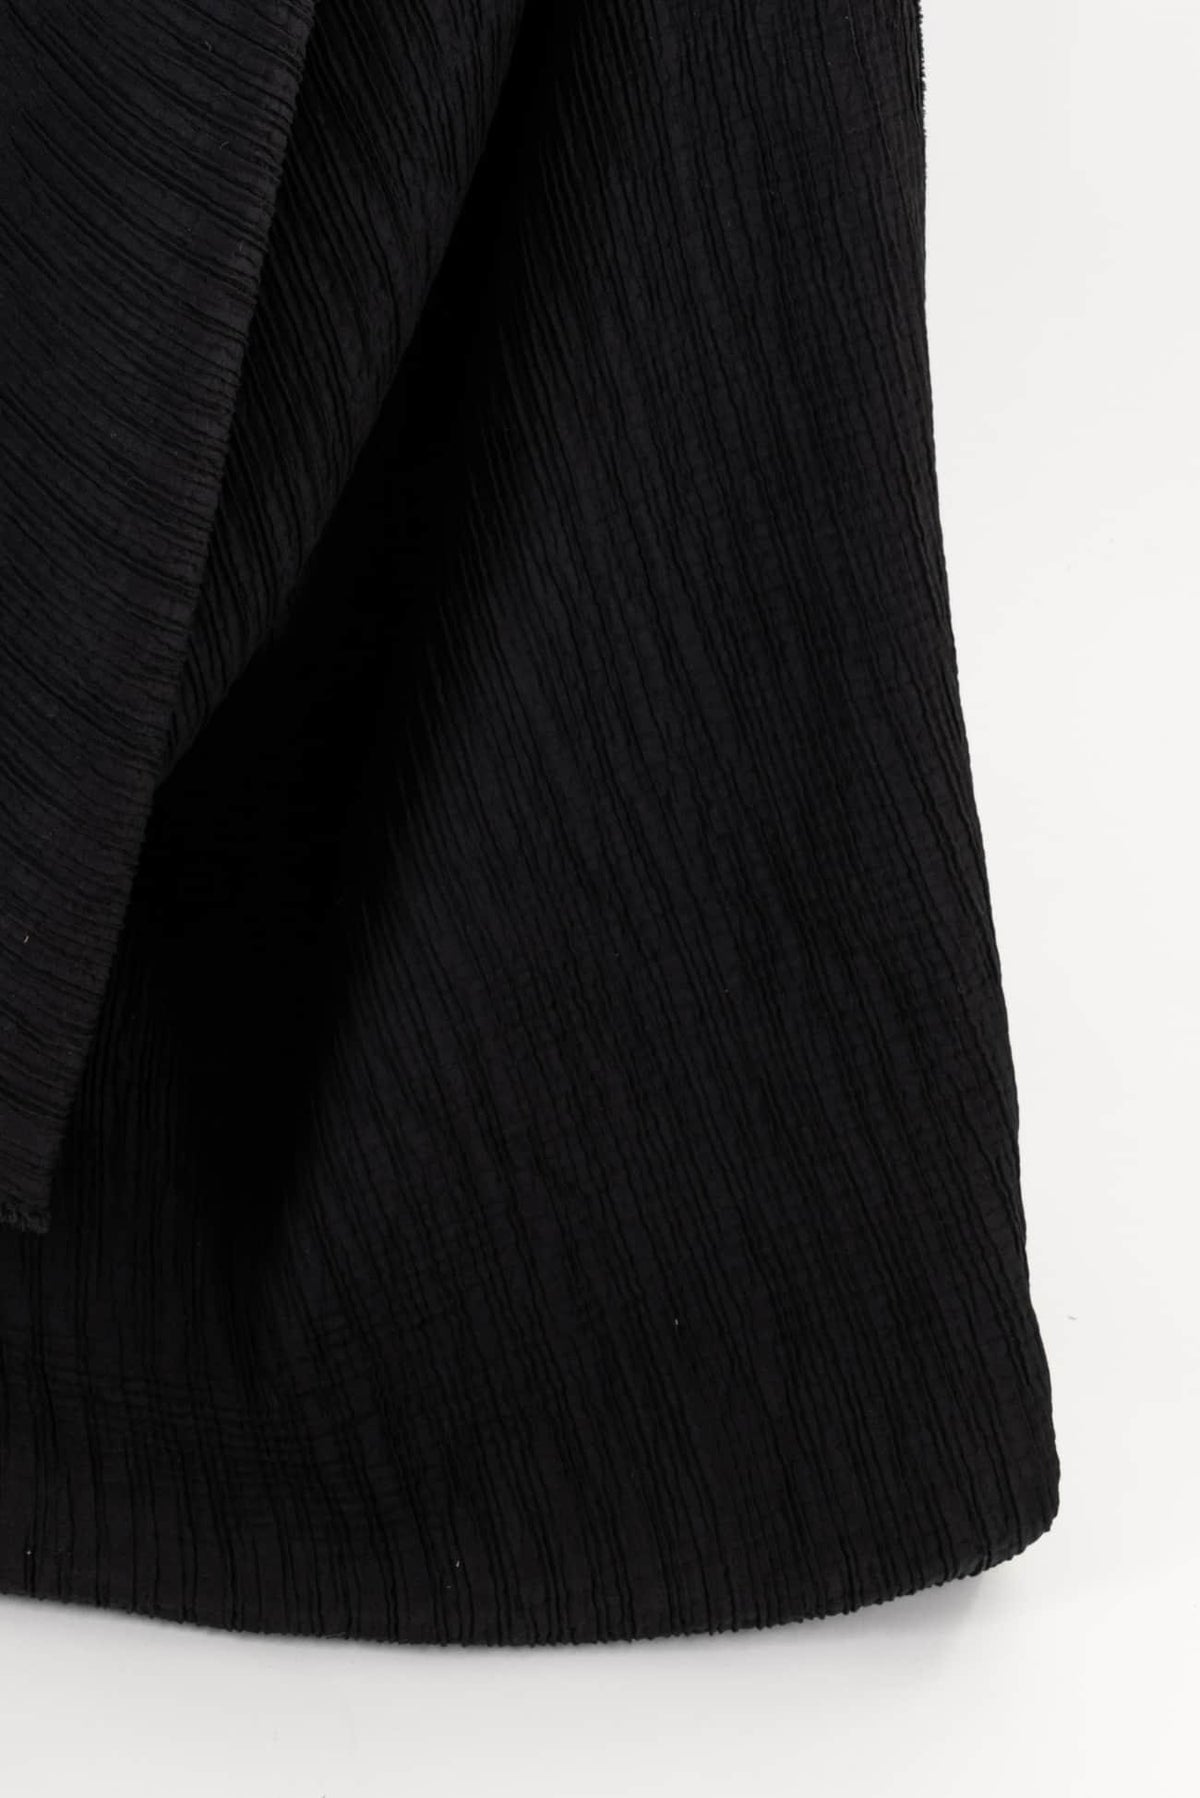 Black Ripples Woven - Marcy Tilton Fabrics